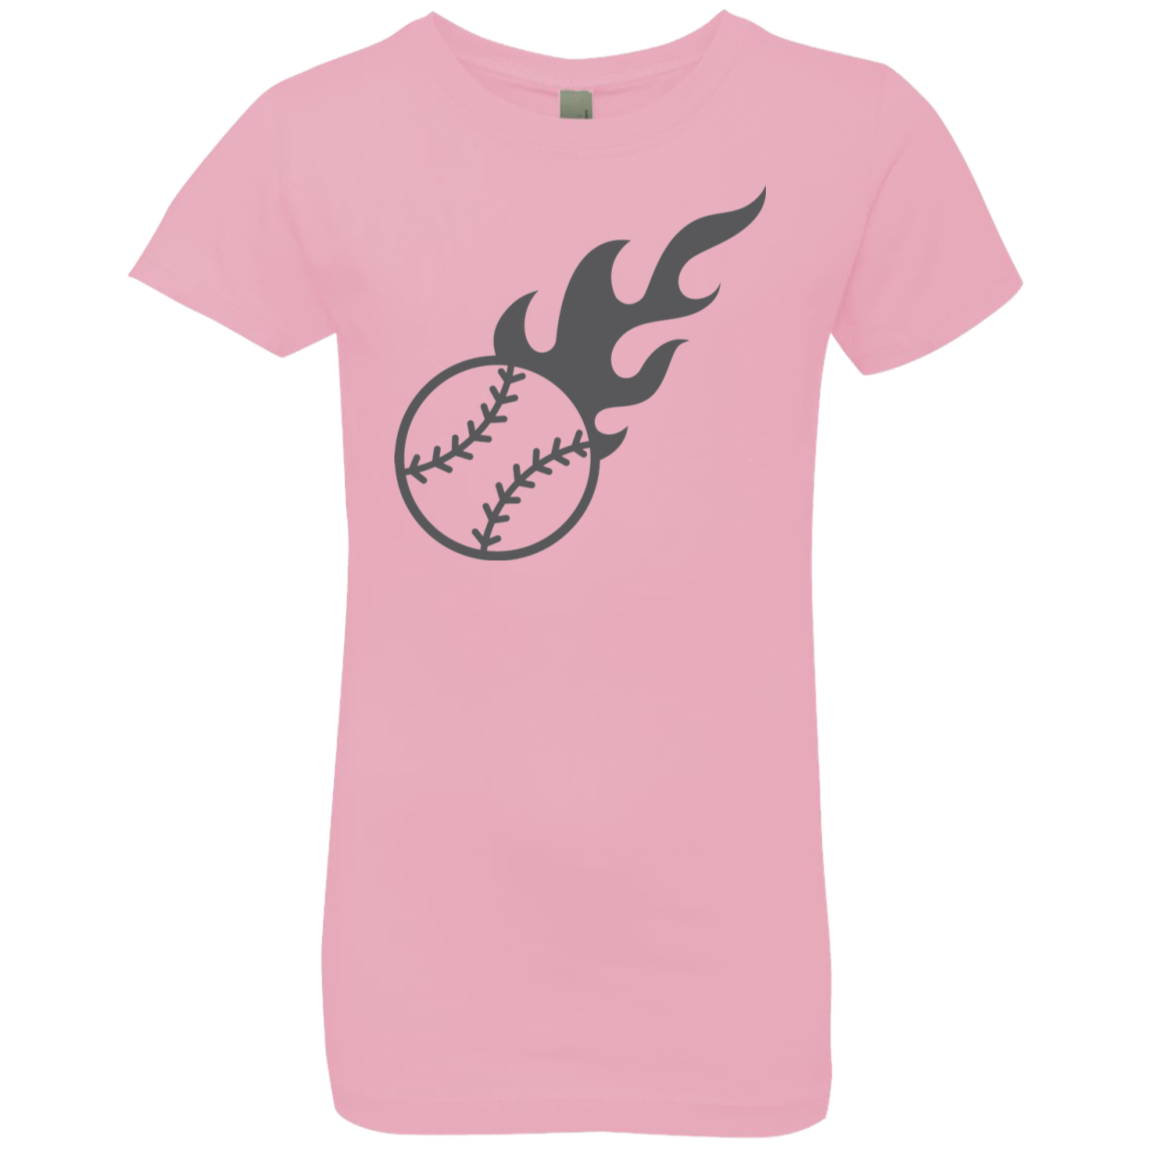 baseball/softball Girls' Princess T-Shirt